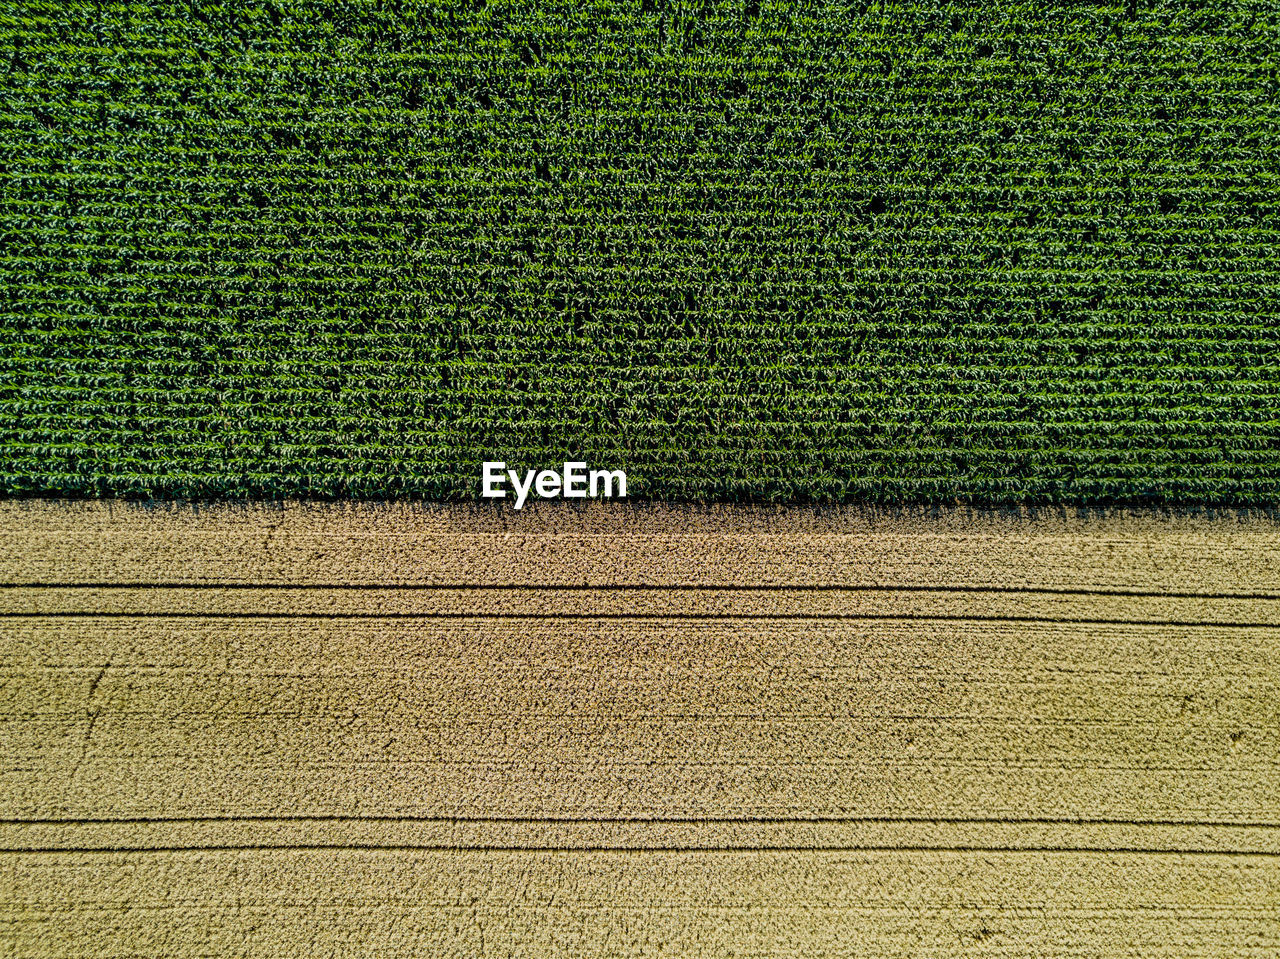 View of corn field